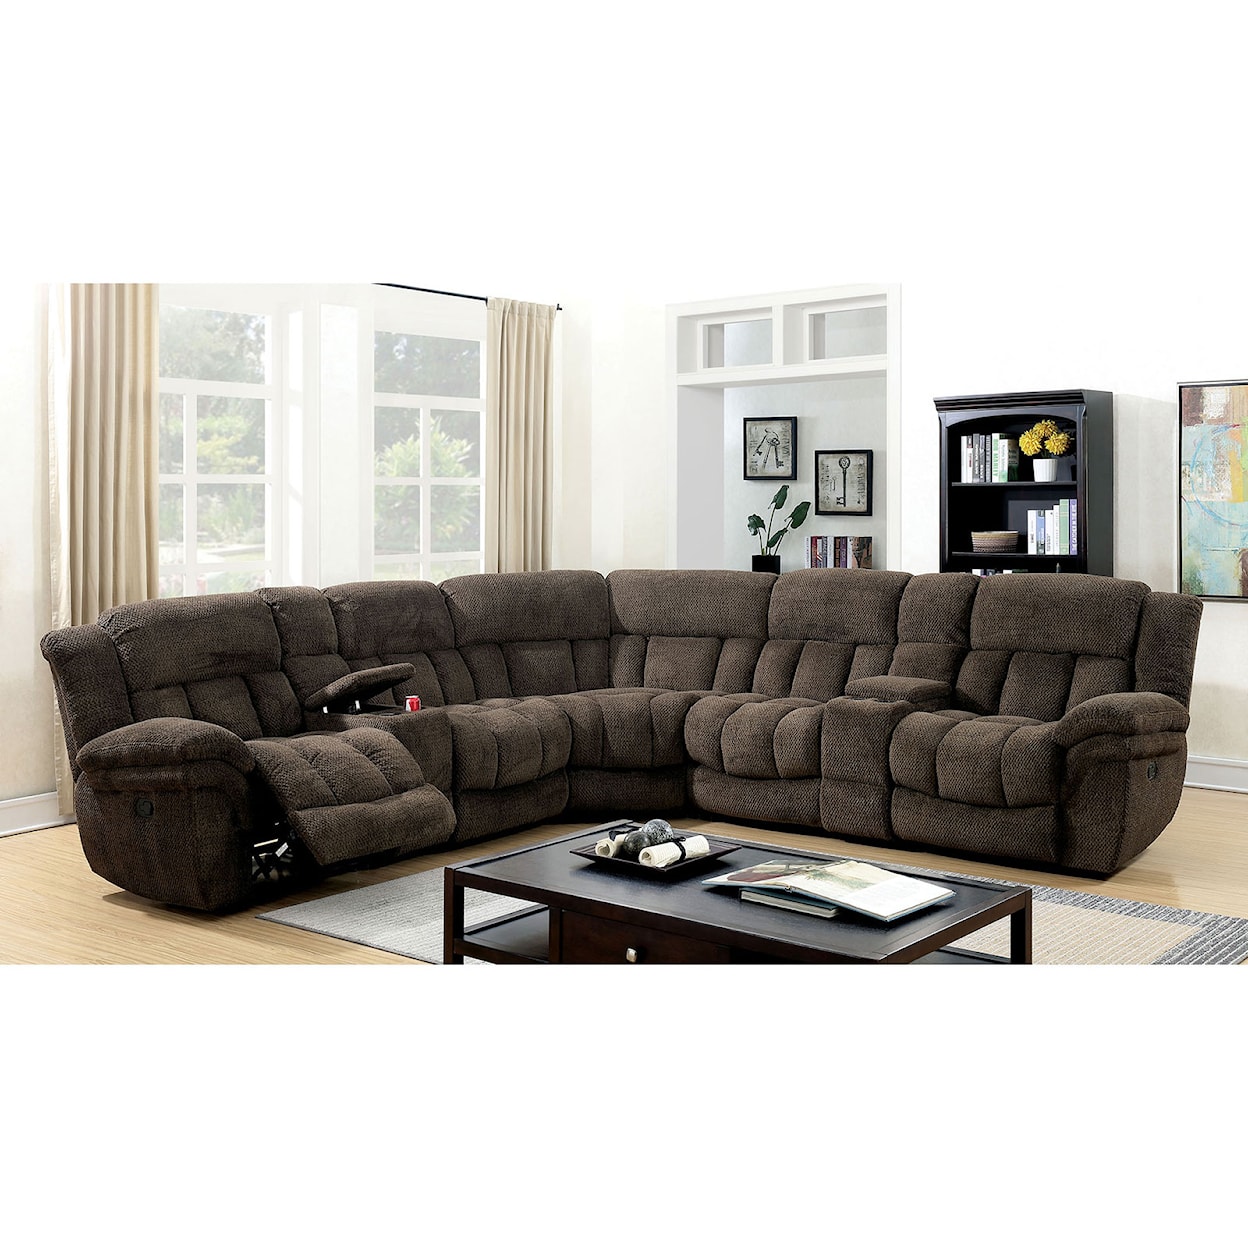 Furniture of America Irene Sectional Sofa